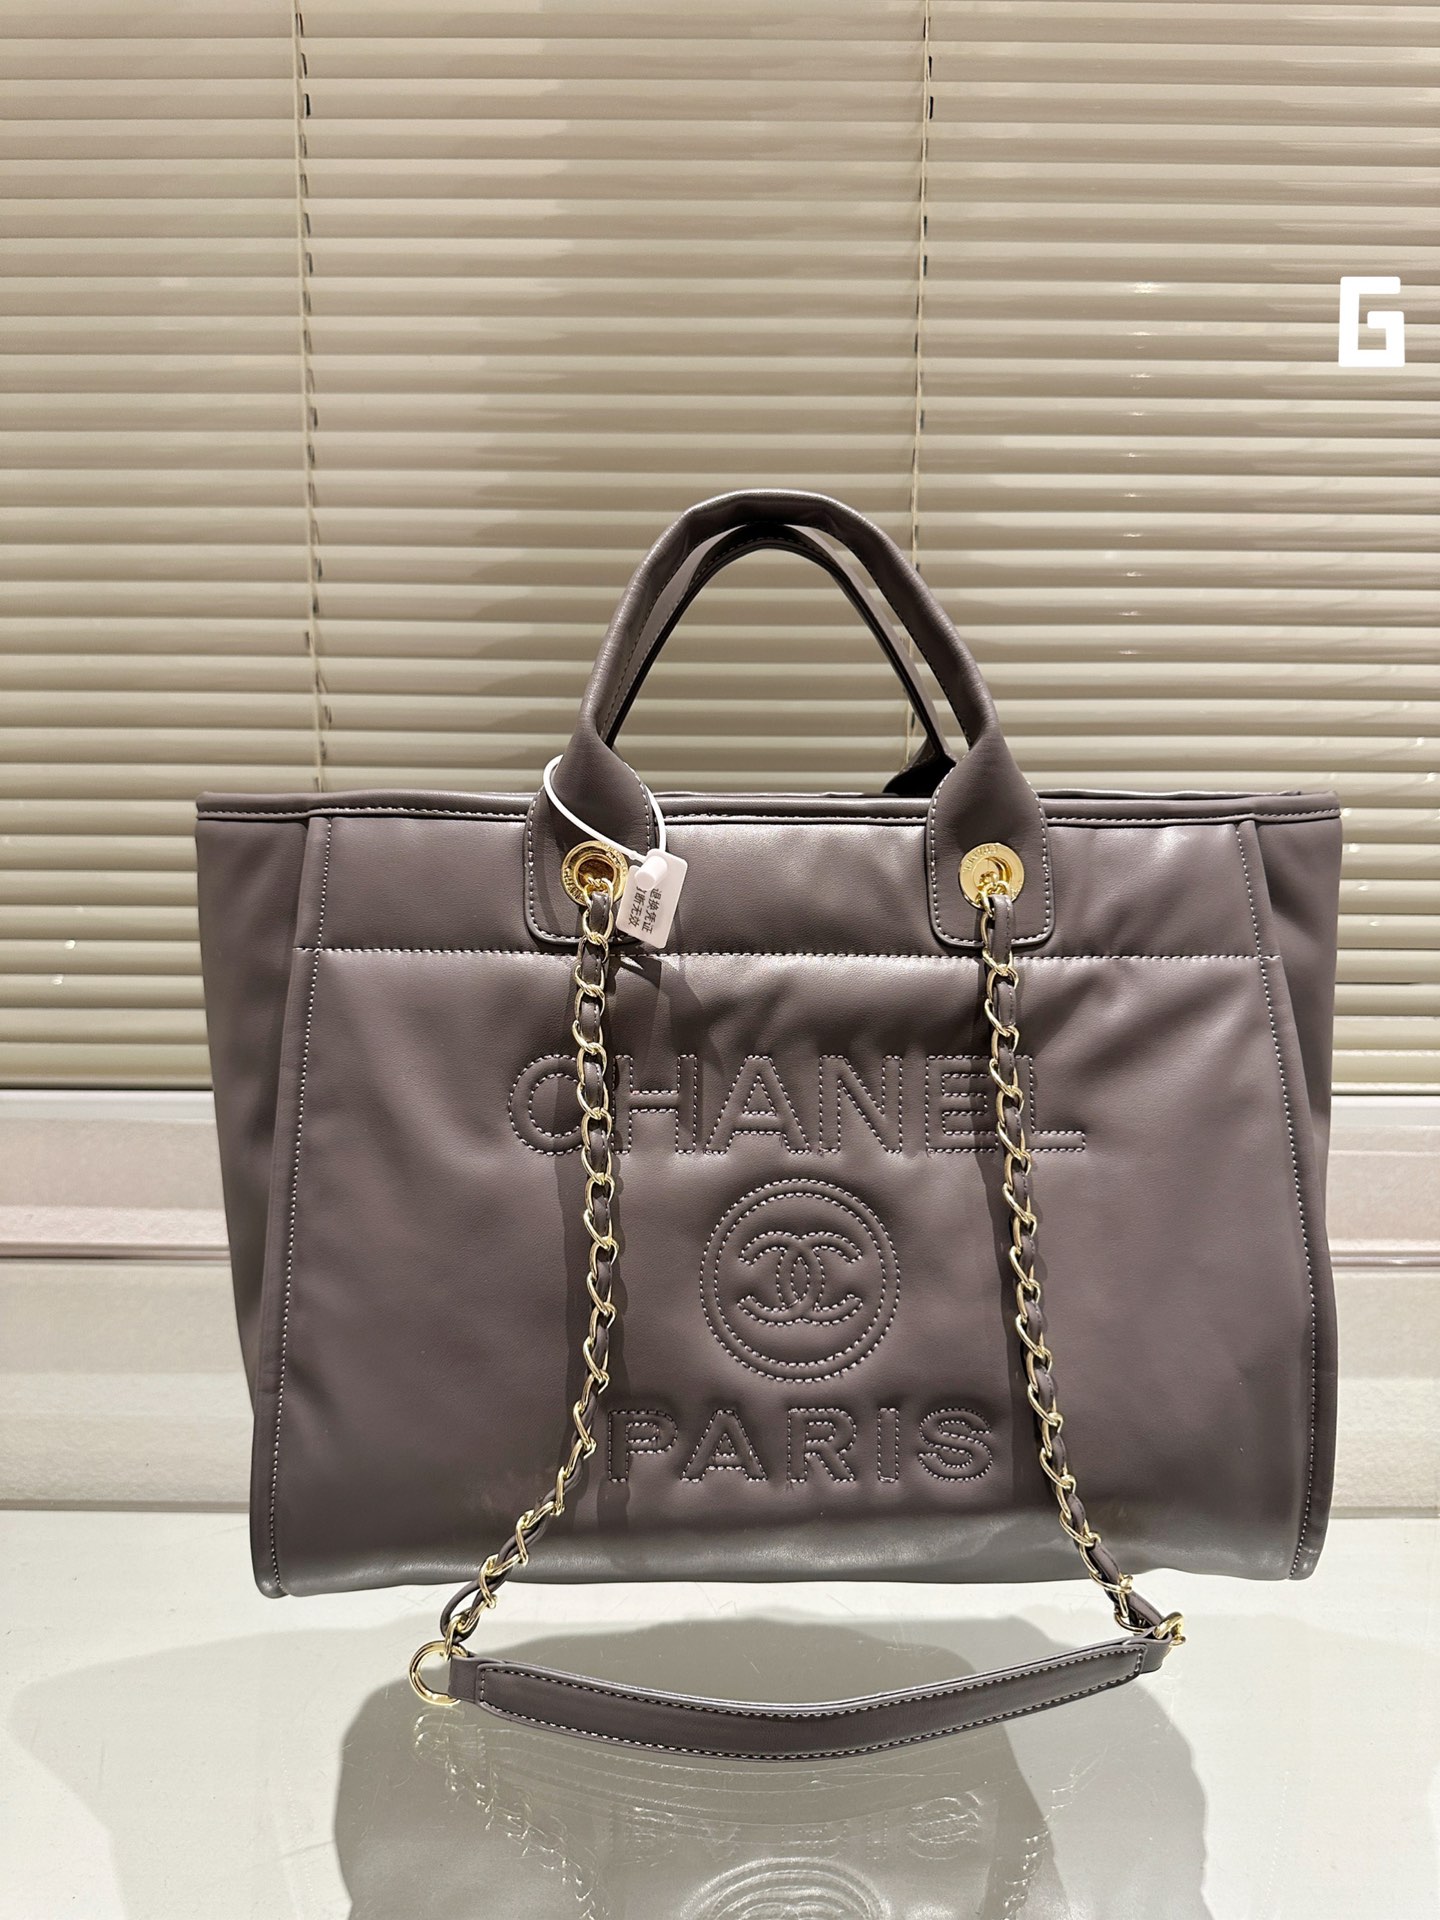 Top Perfect Fake
 Chanel Bags Handbags Black Beach